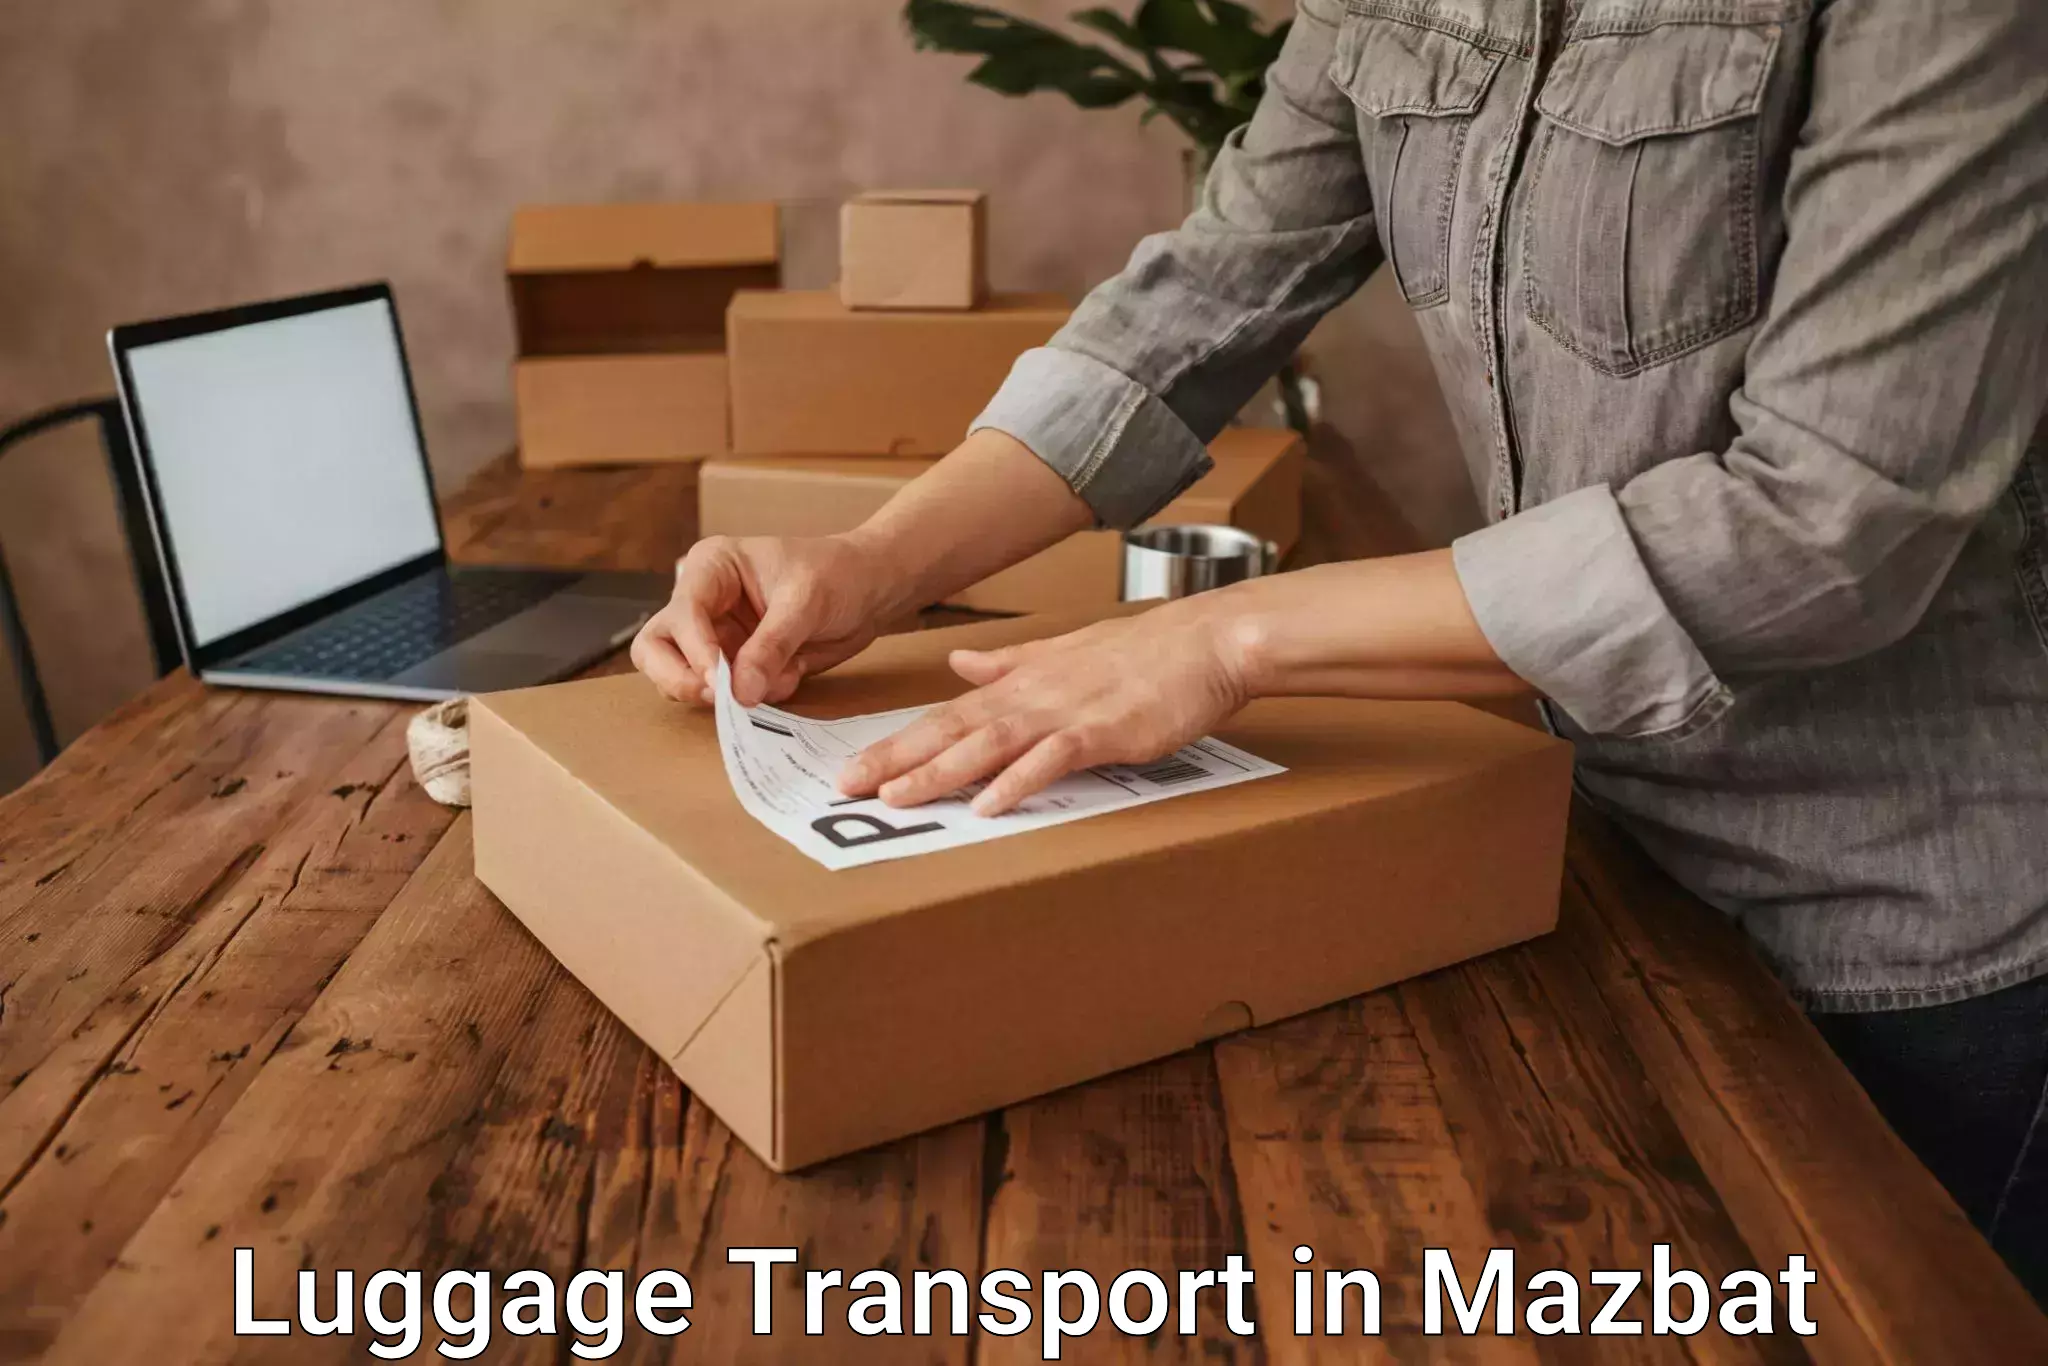 Domestic luggage transport in Mazbat